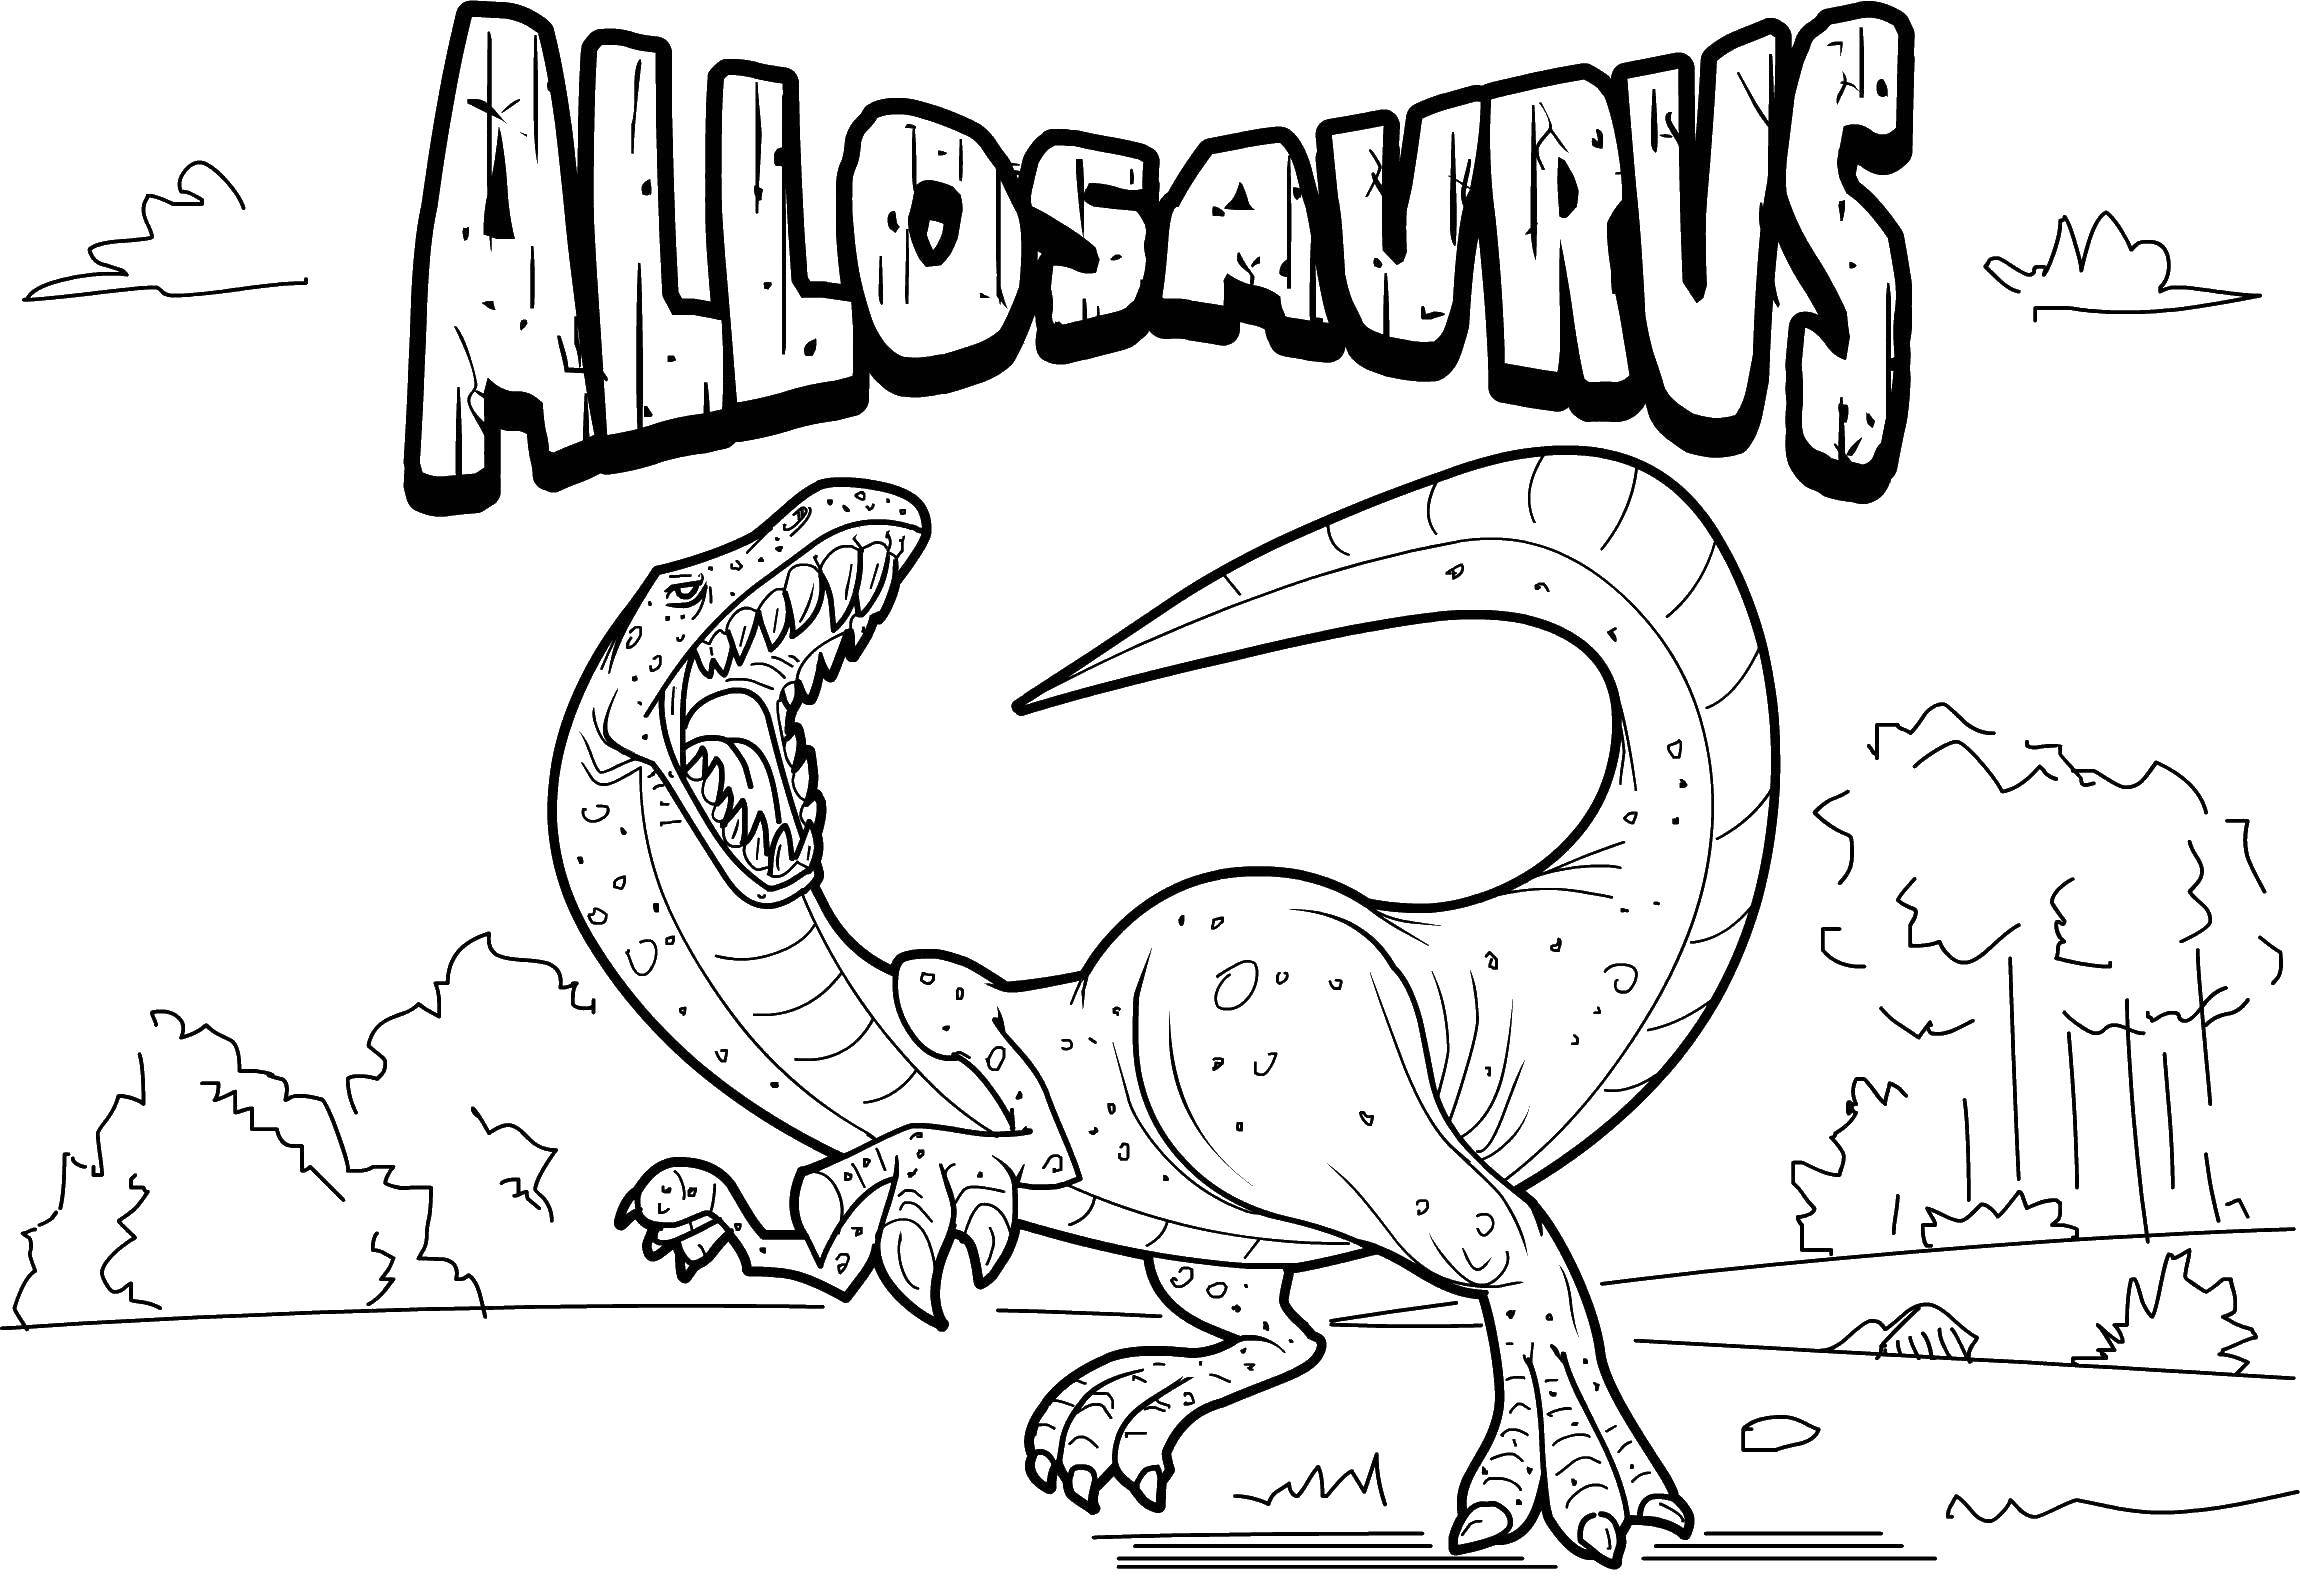 Coloring Ancient allosaurus. Category Jurassic Park. Tags:  Dinosaurs.